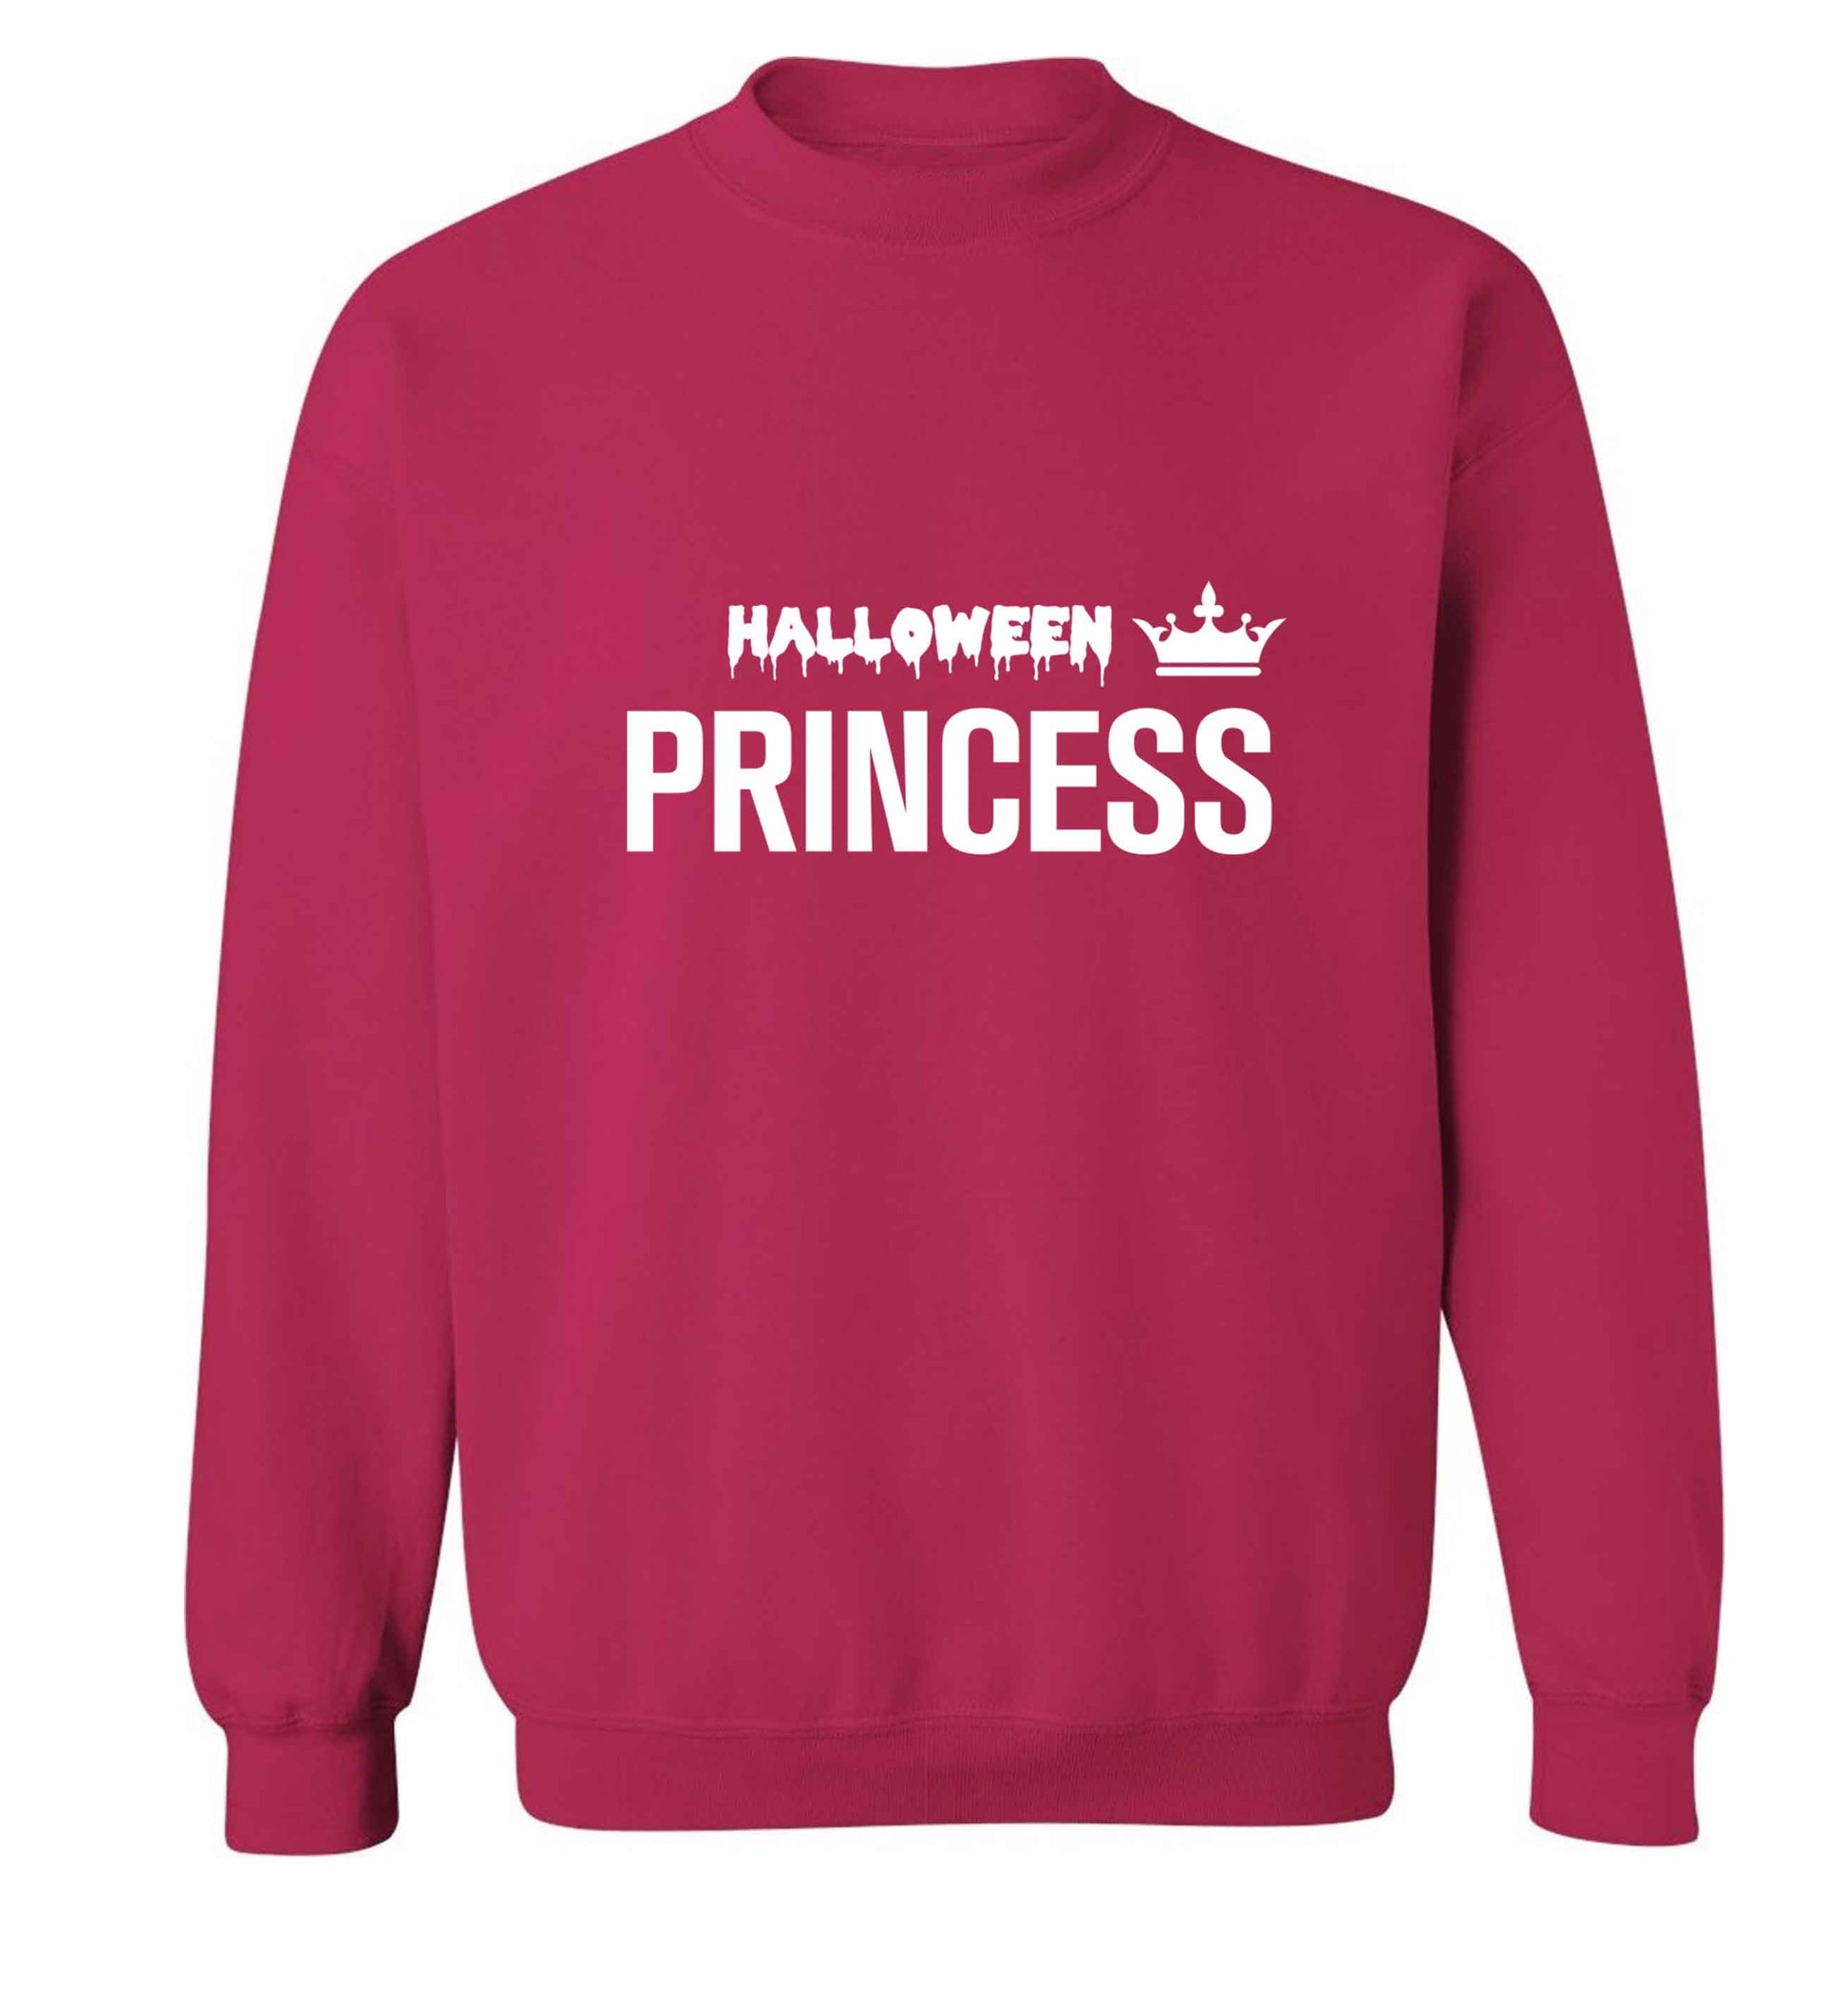 Halloween princess adult's unisex pink sweater 2XL